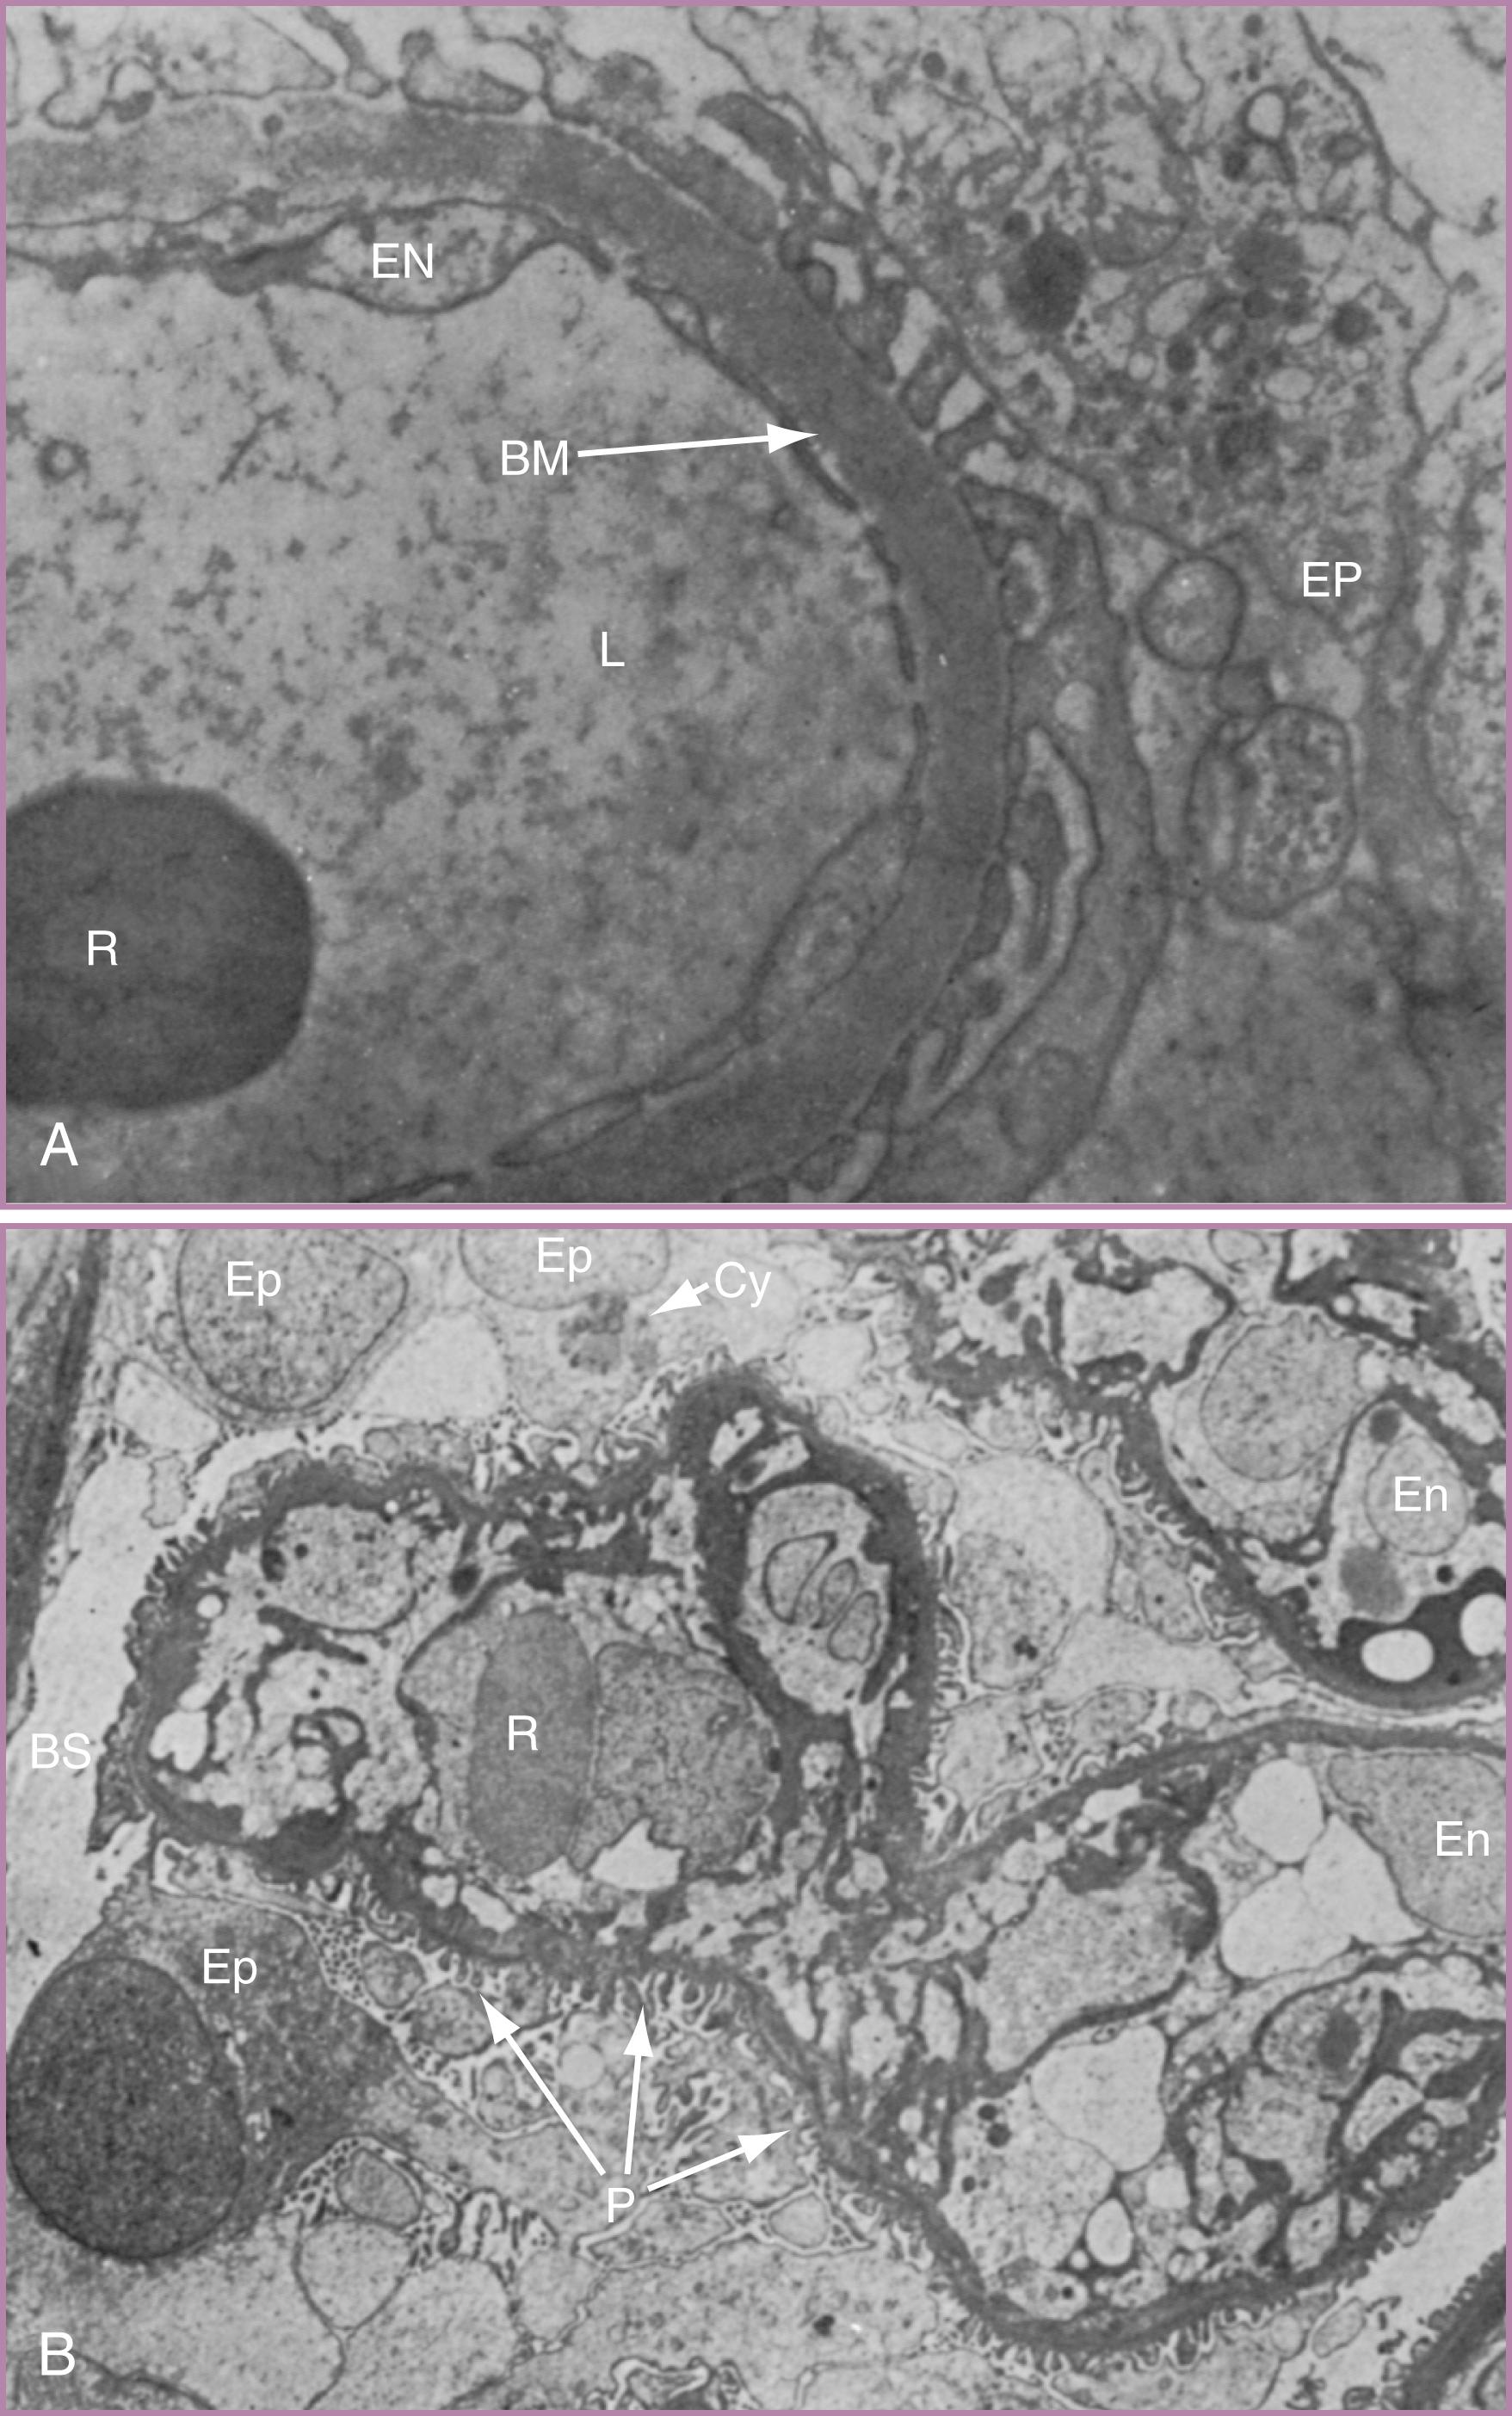 Figure 45.7, Electron photomicrographs of renal glomeruli.